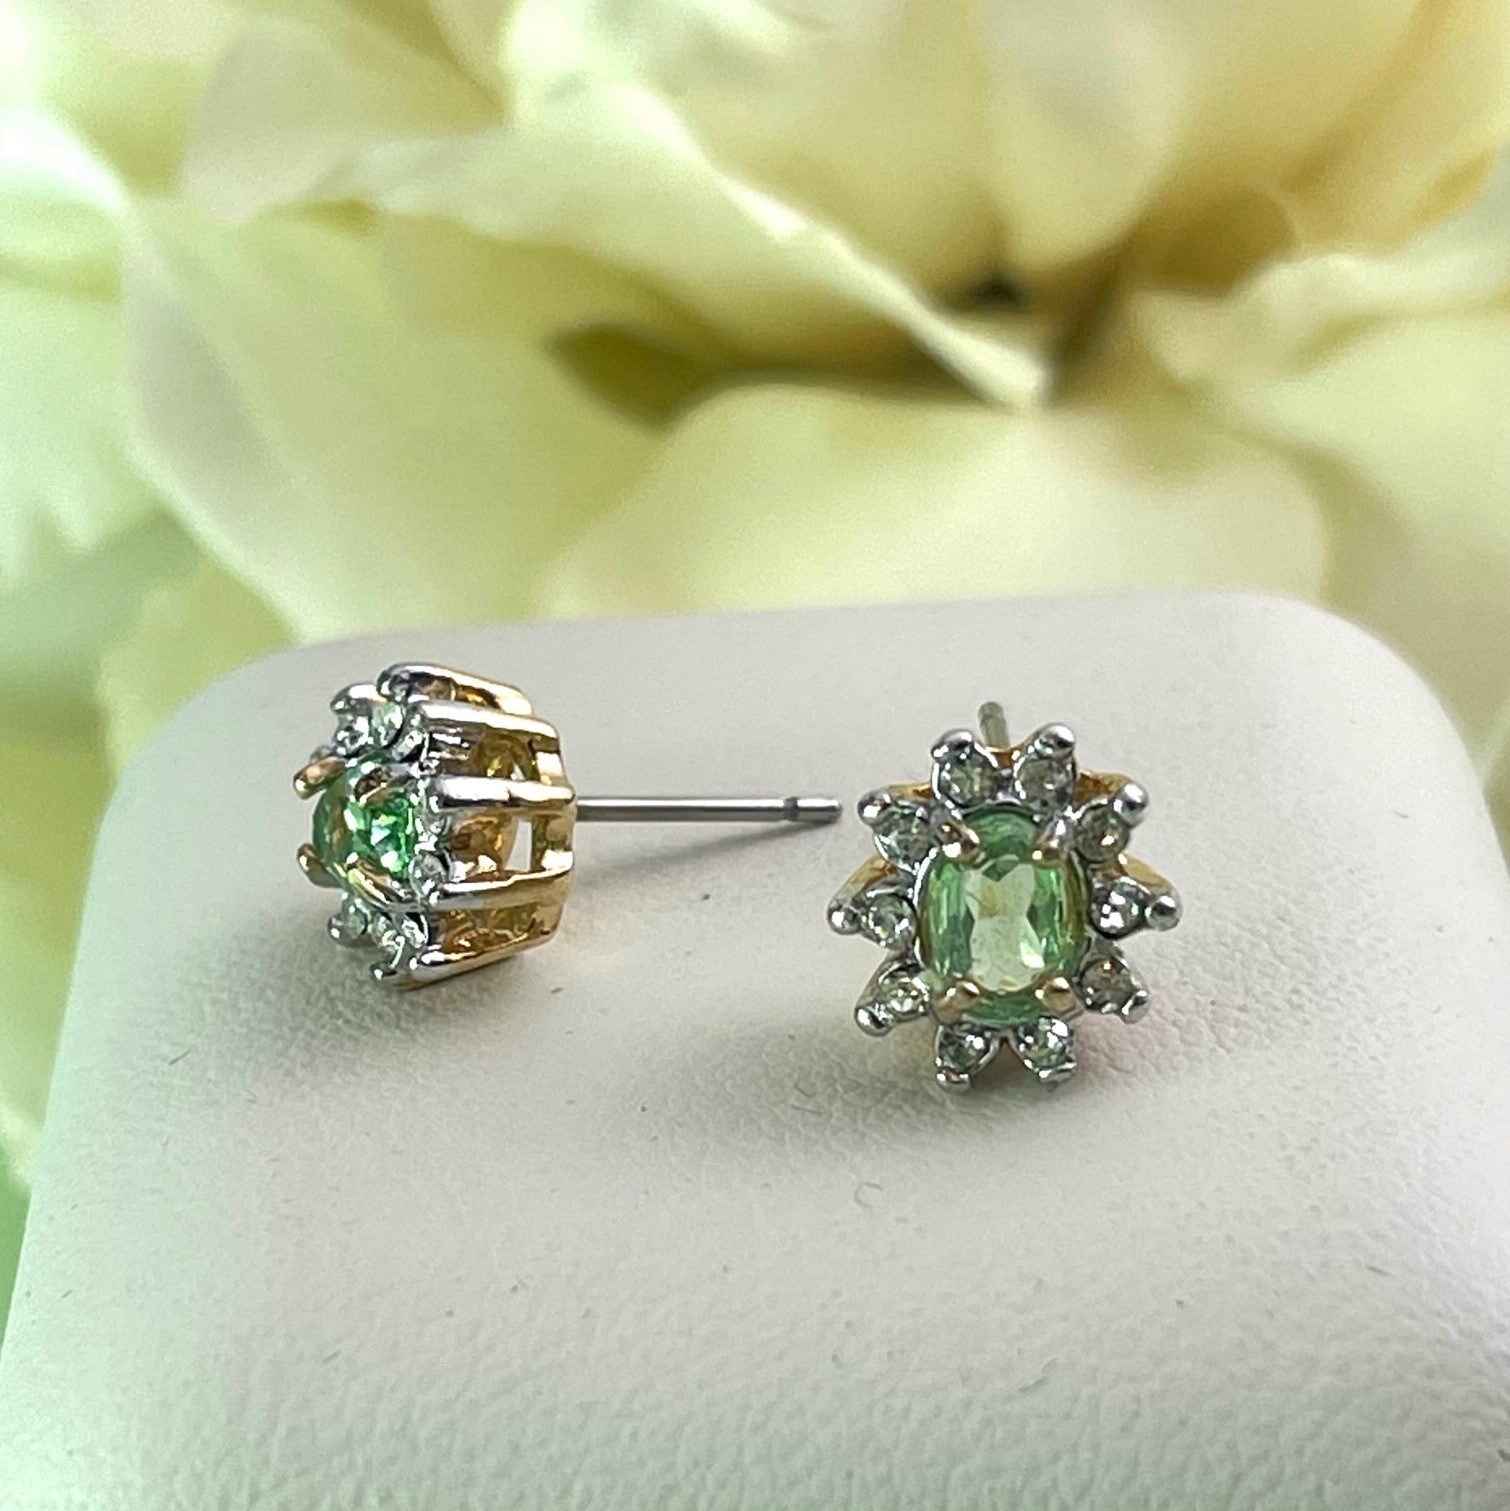 peridot earrings-stud-crystal-peridot-post earrings-august birthstone gift for women girls